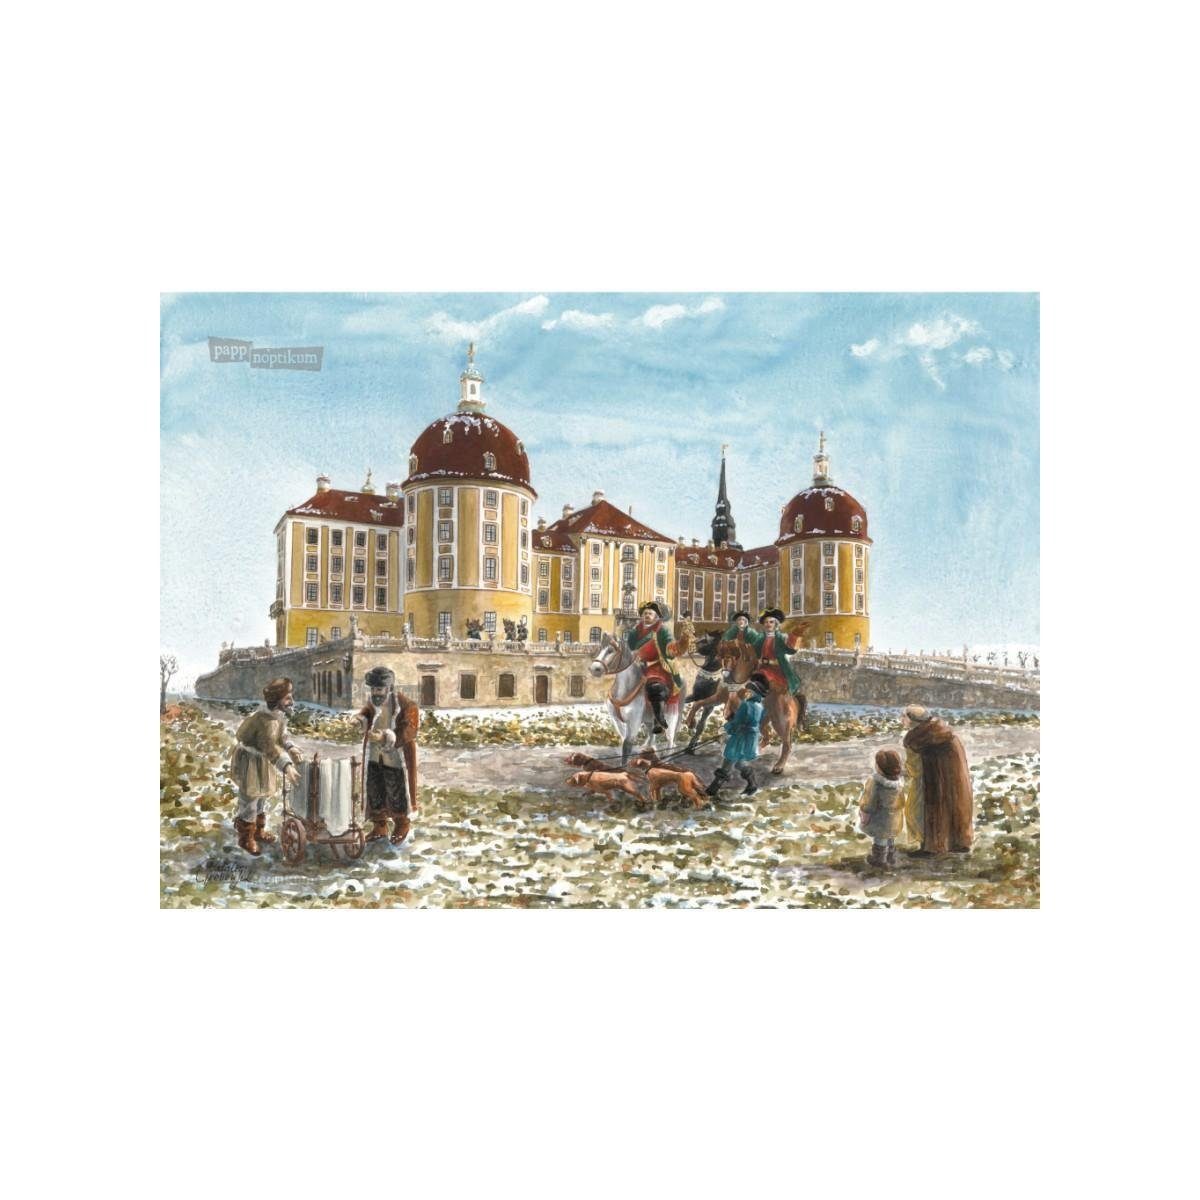 Schloss 1048 (Mini-Adventskalender) Adventskalender Moritzburg pappnoptikum -